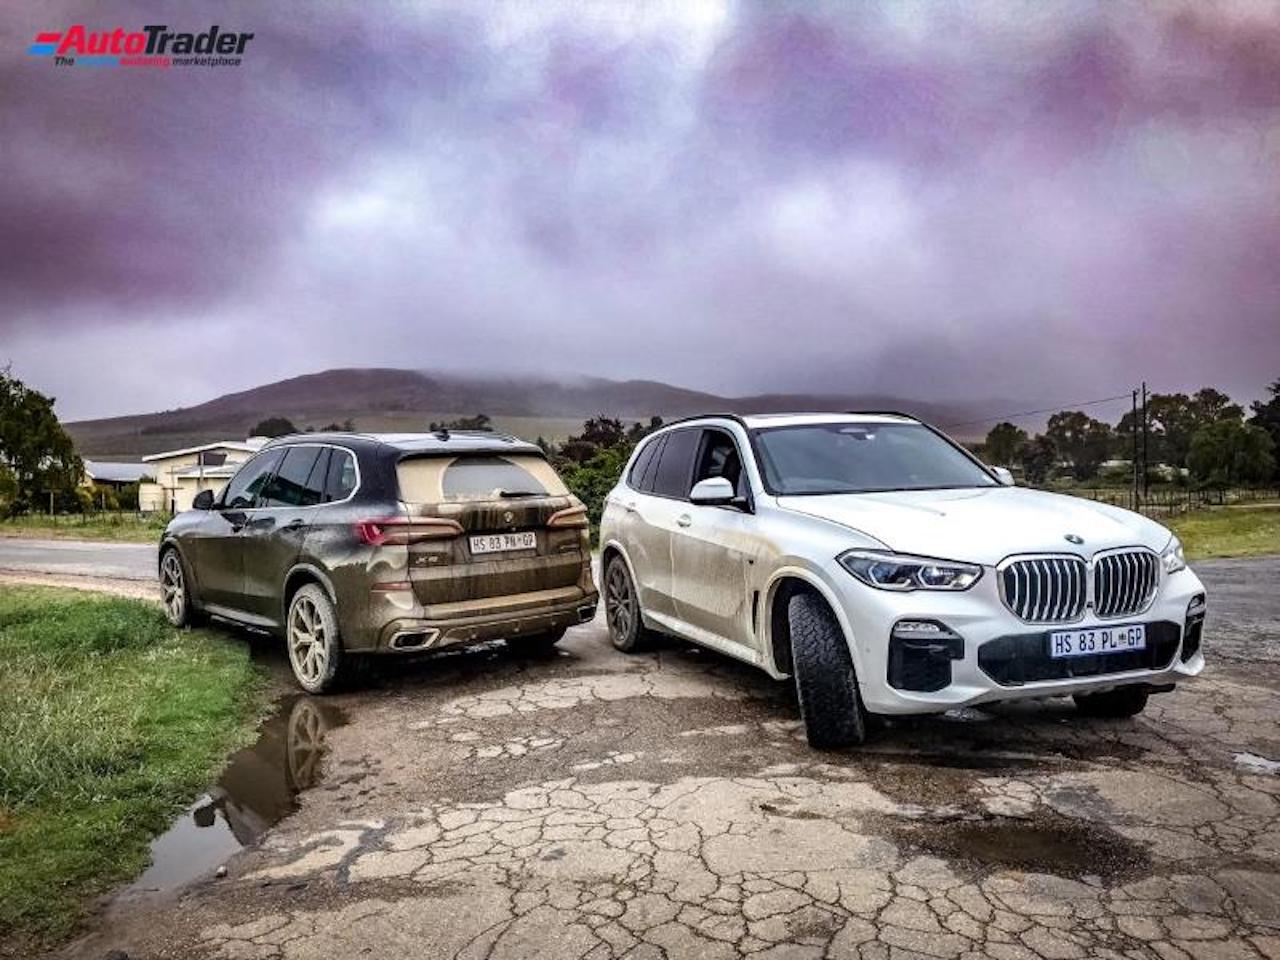 BMW X5 vs Jeep Grand Cherokee vs Land Rover Discovery